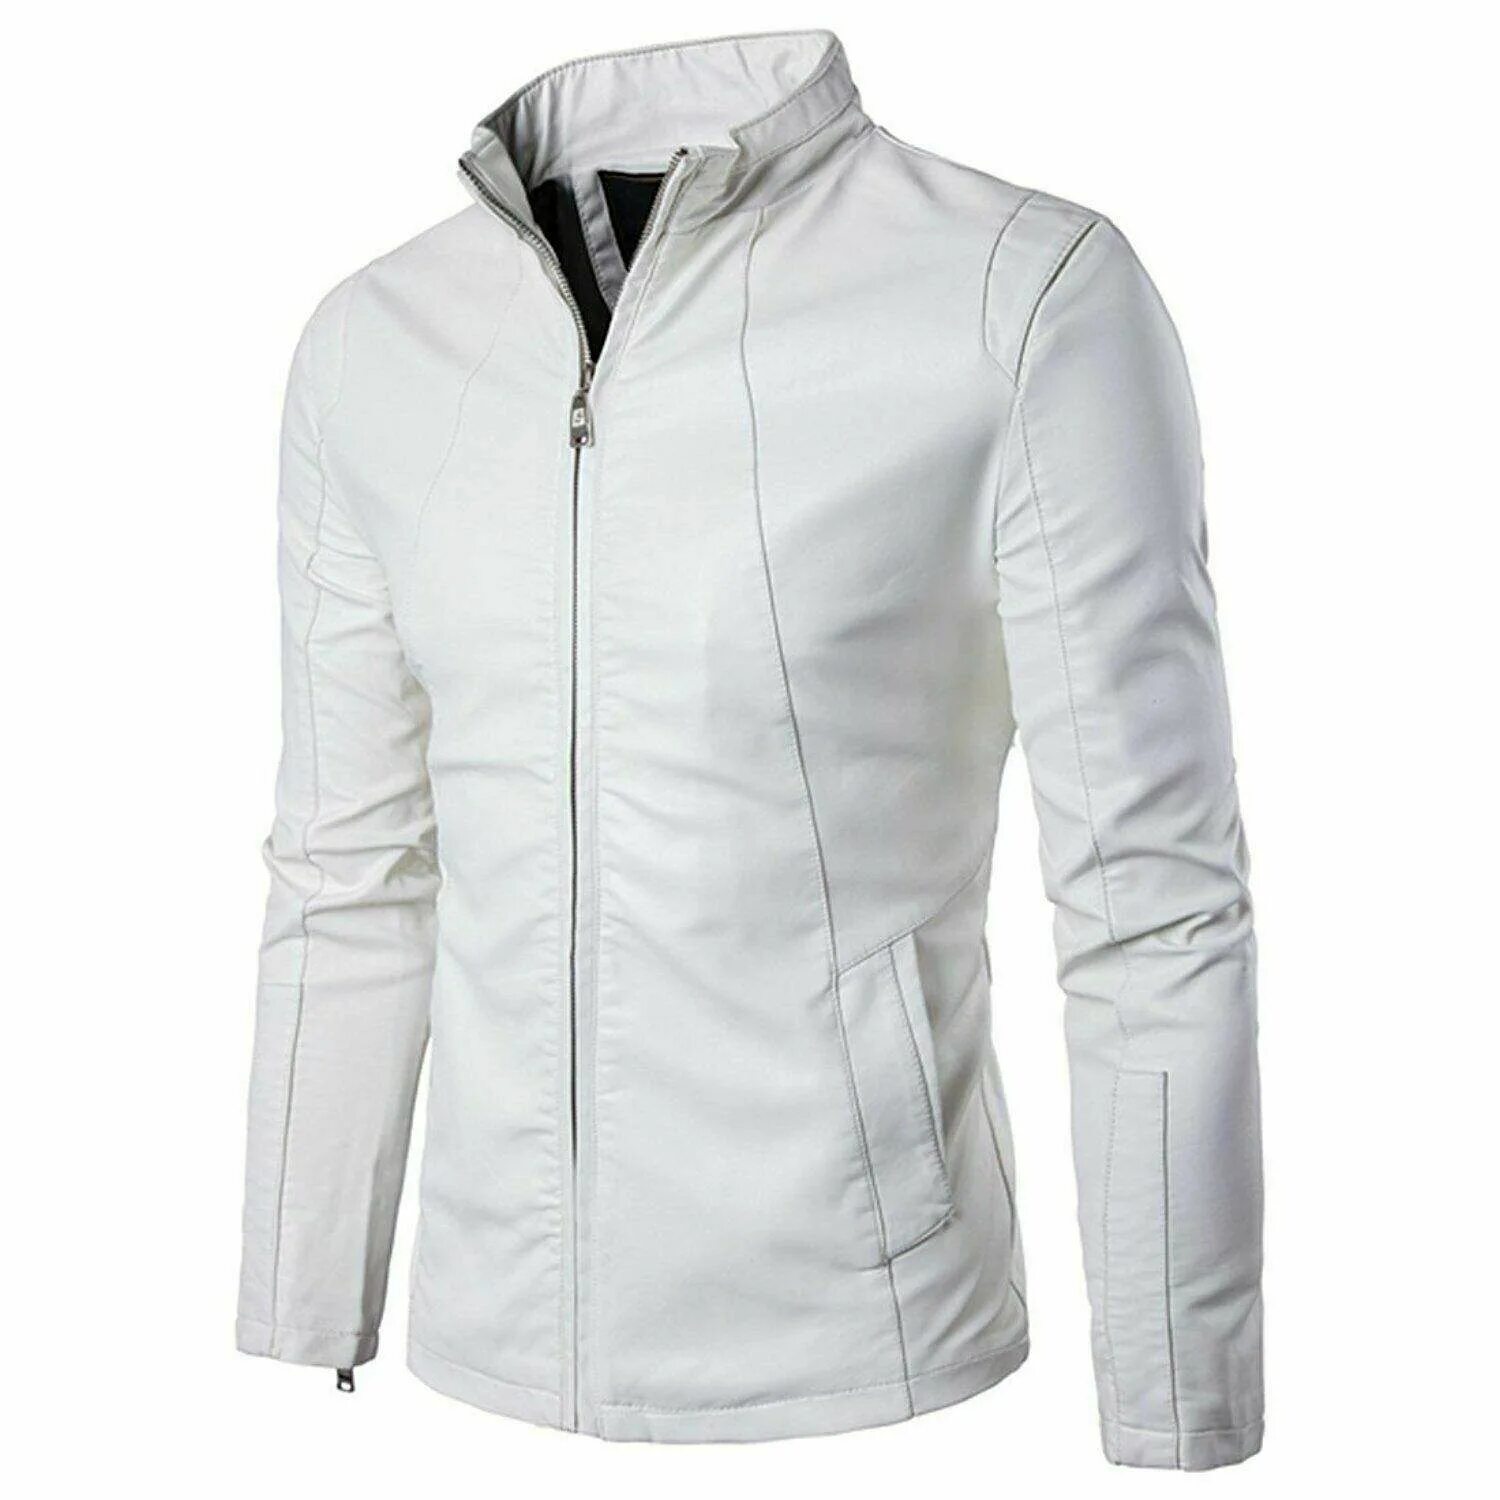 White jacket. Белая куртка мужская. Белая кожаная куртка мужская. Куртка лакосте белая. Мужская белая куртка белая из овчины.